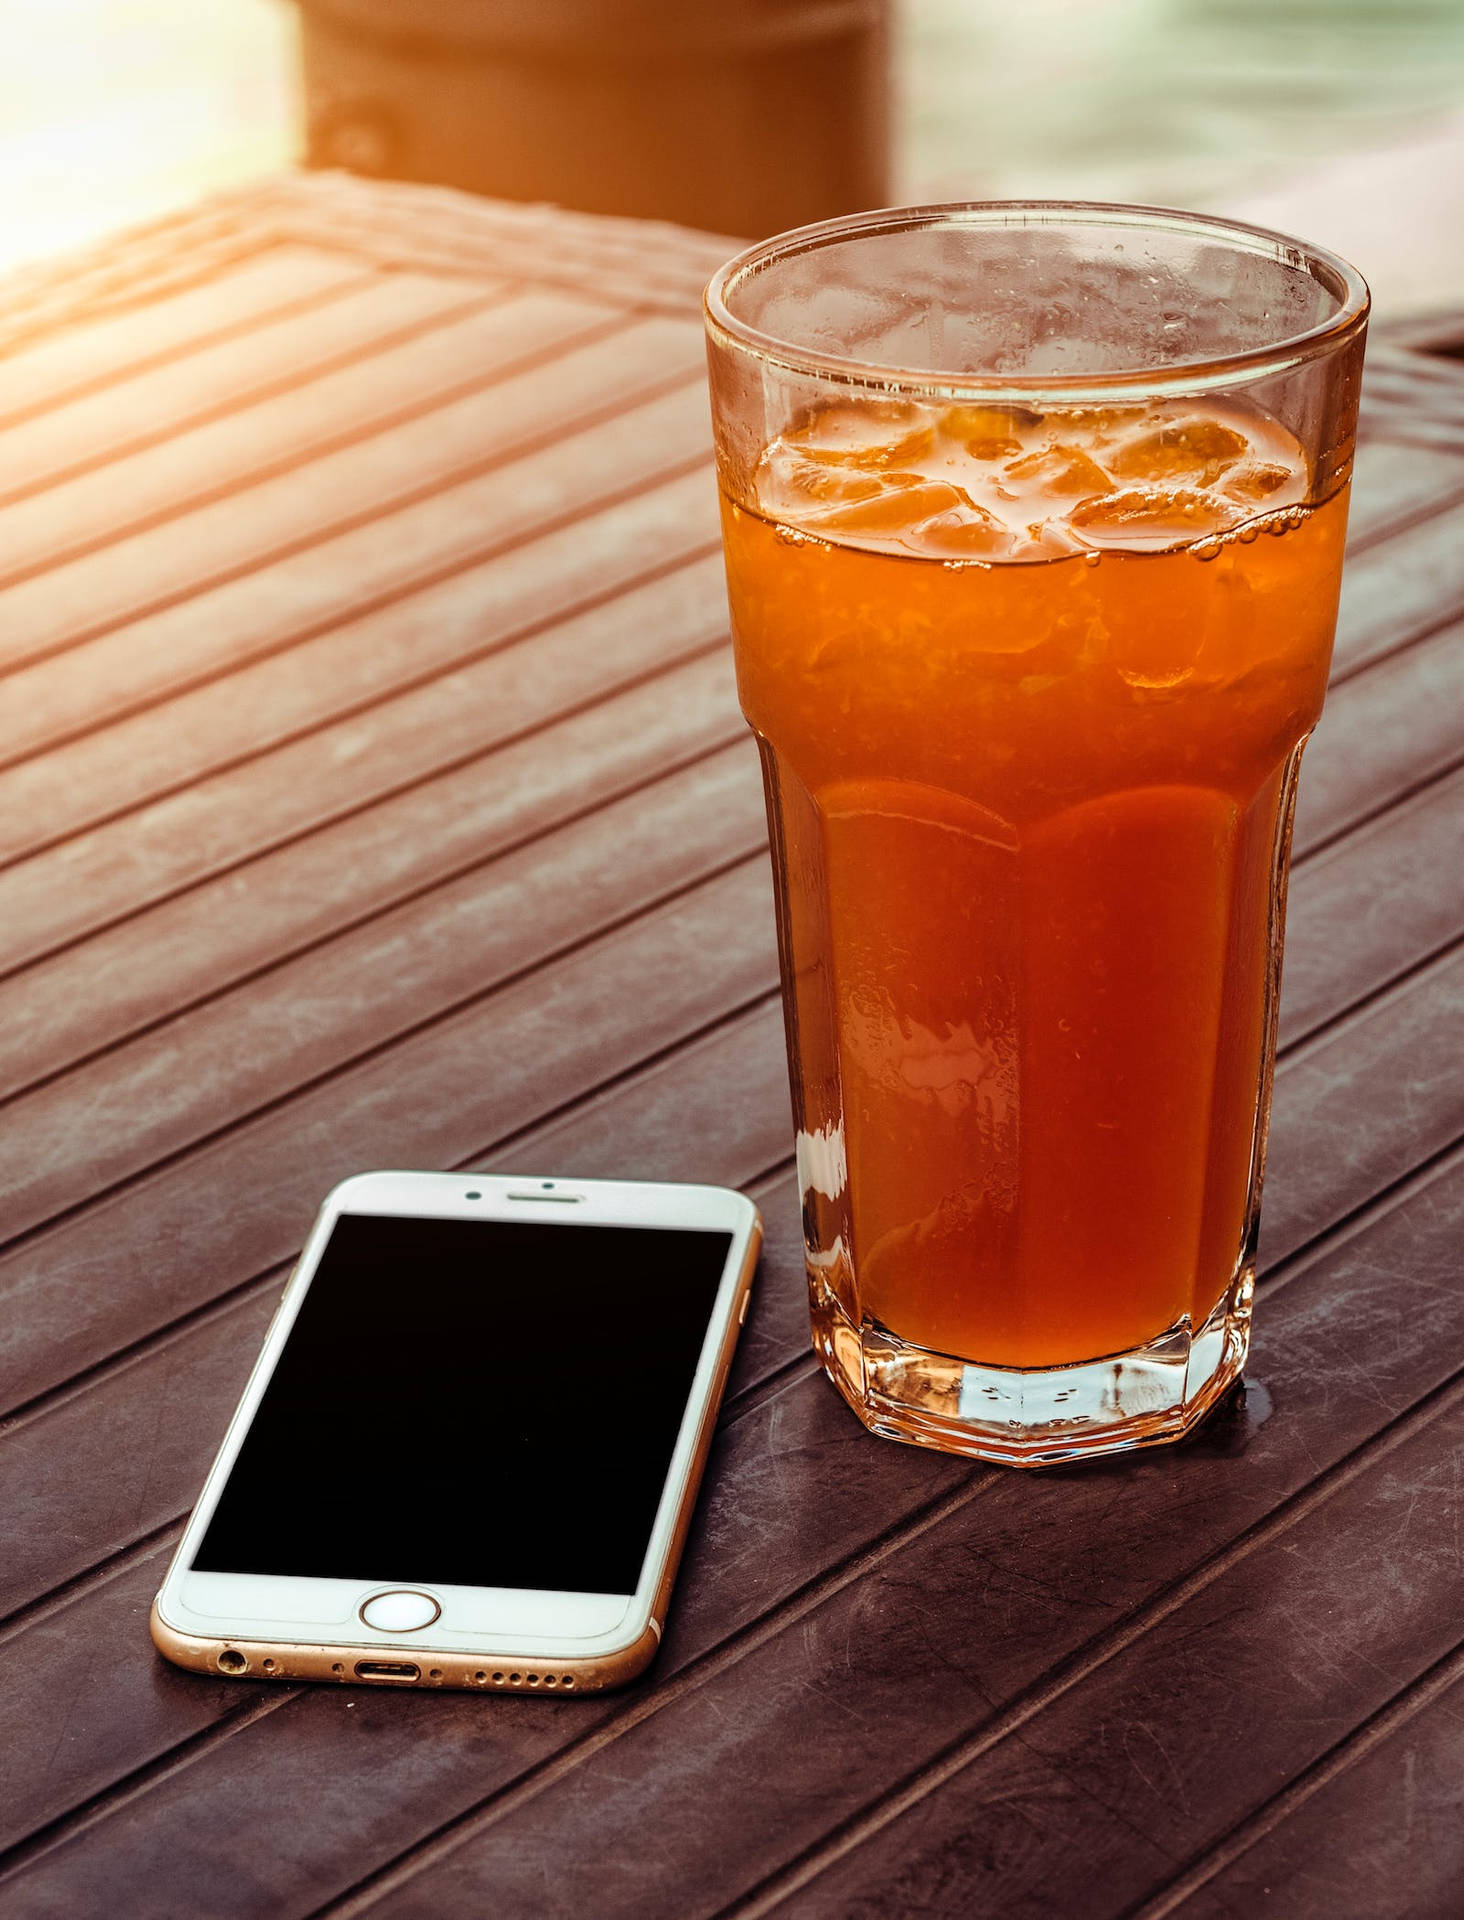 Original Iphone 6 And Orange Juice Background